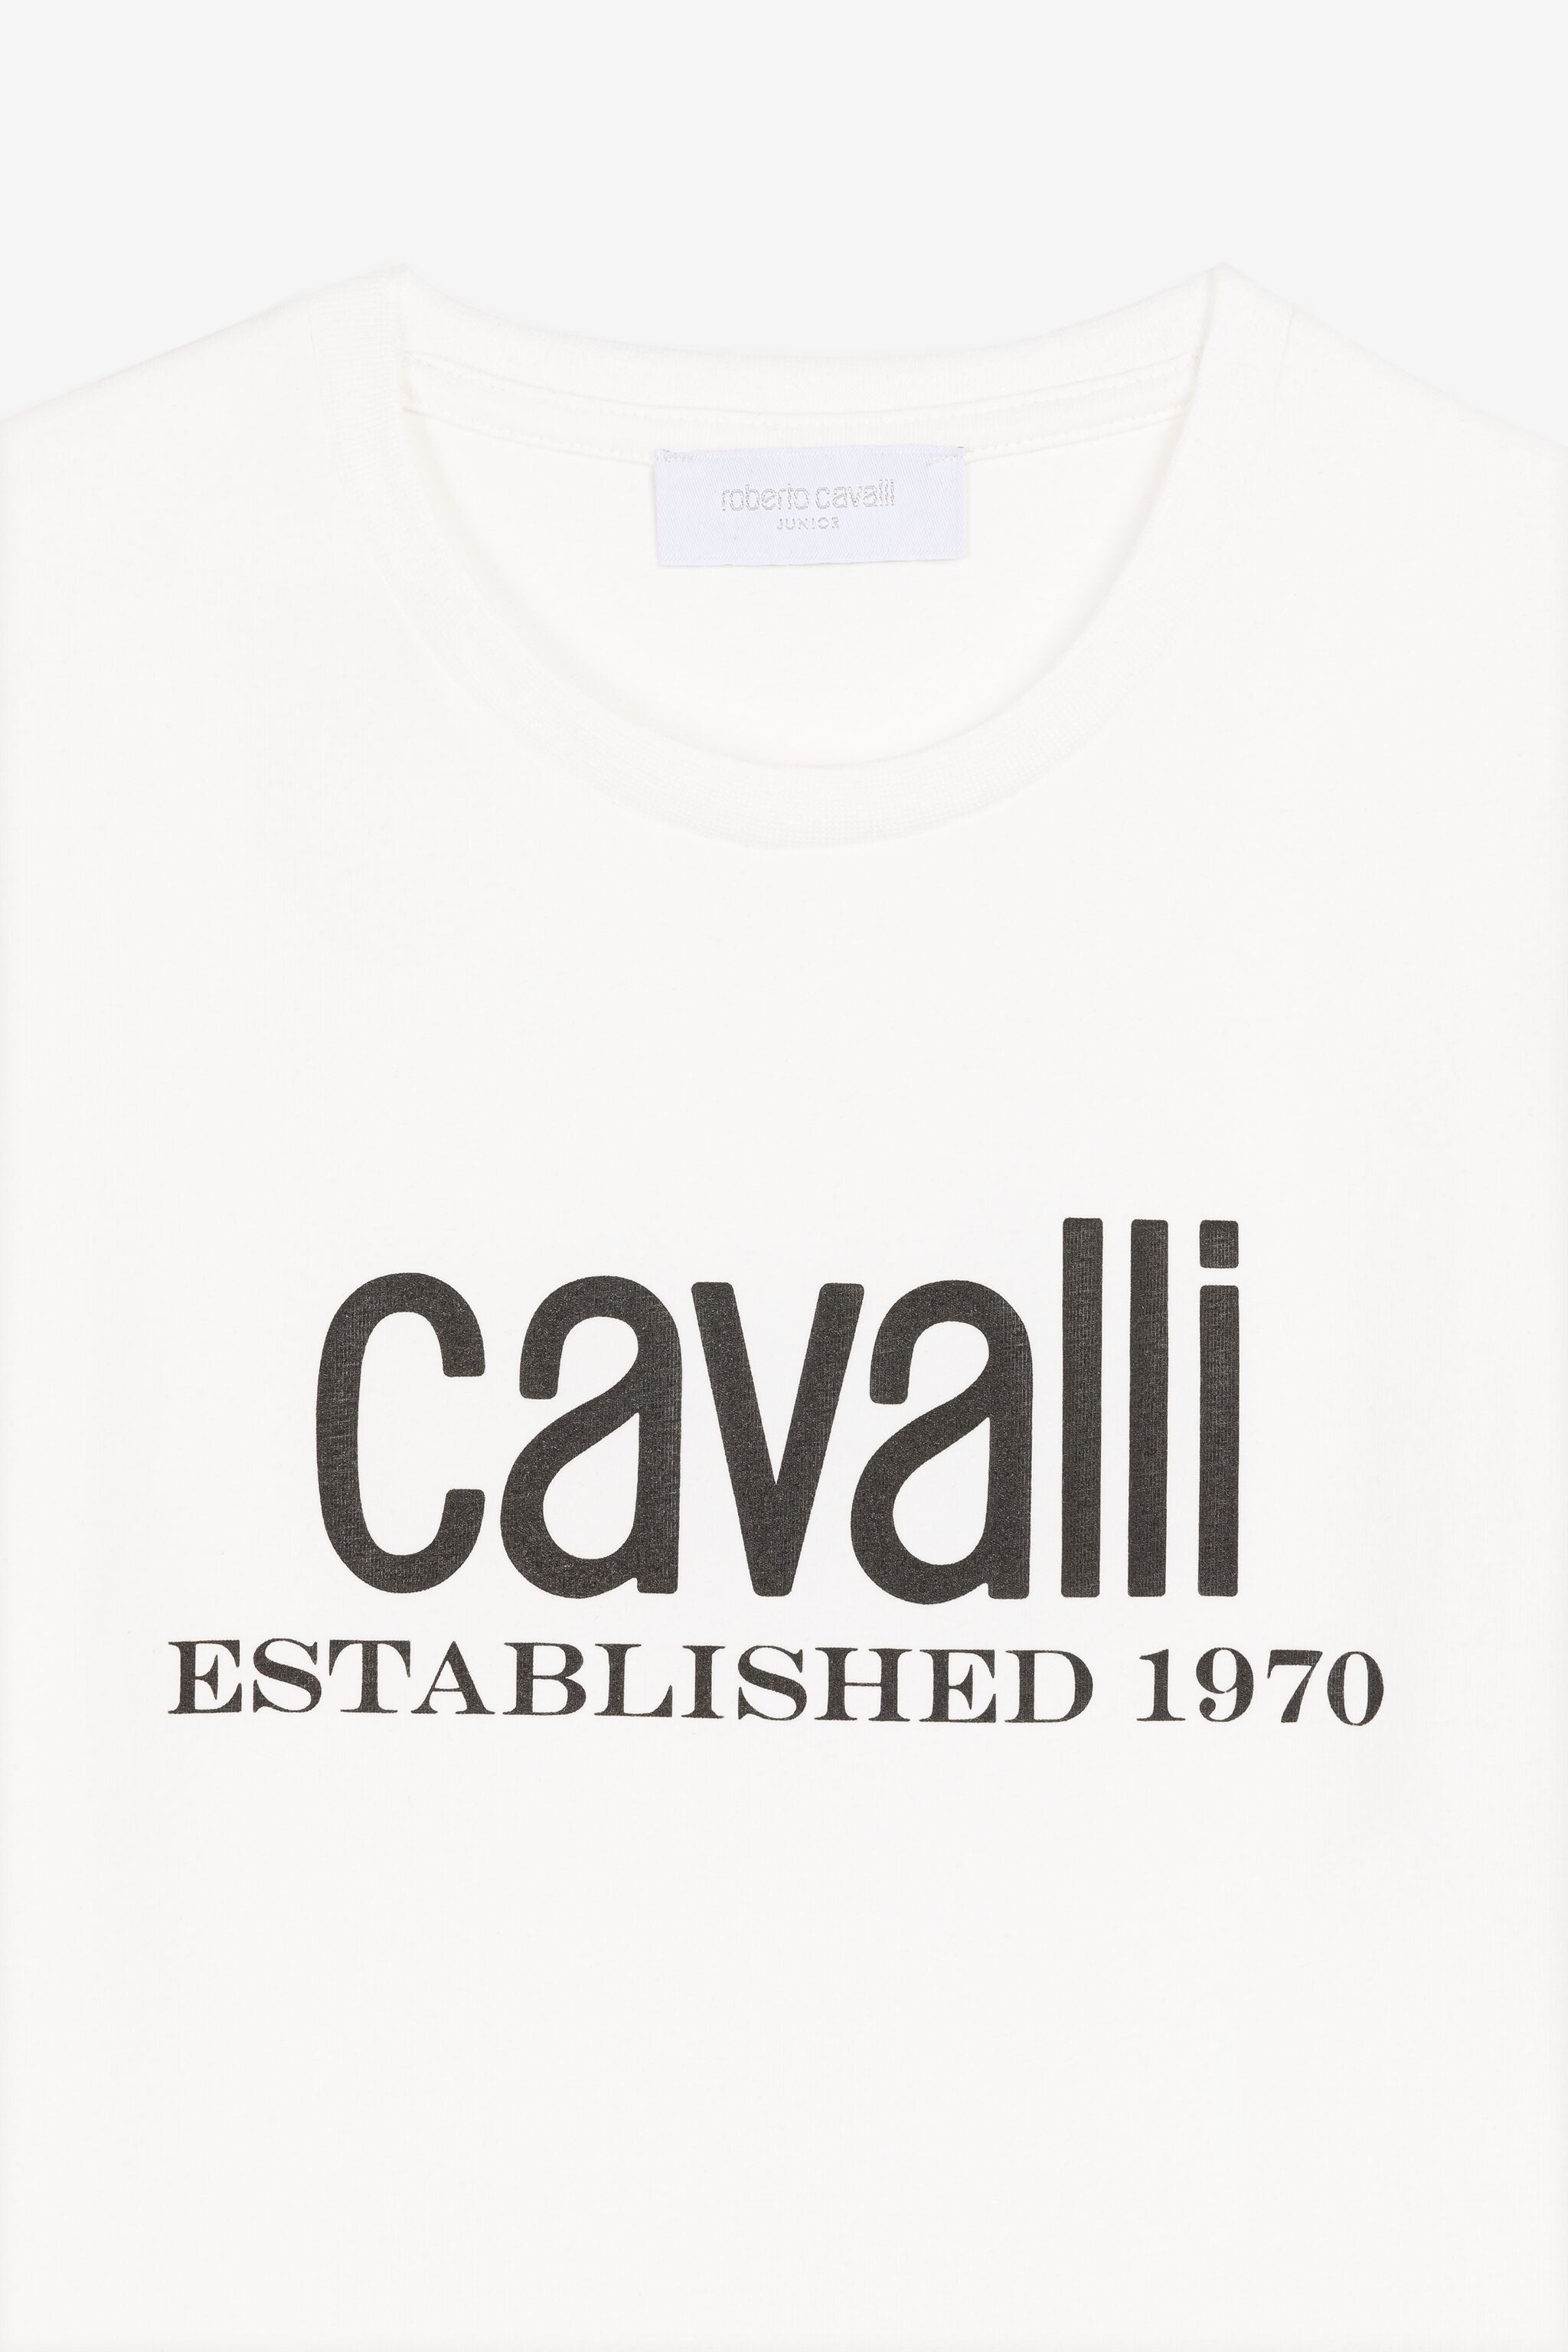 Roberto Cavalli Junior logo-print babygrow set - White